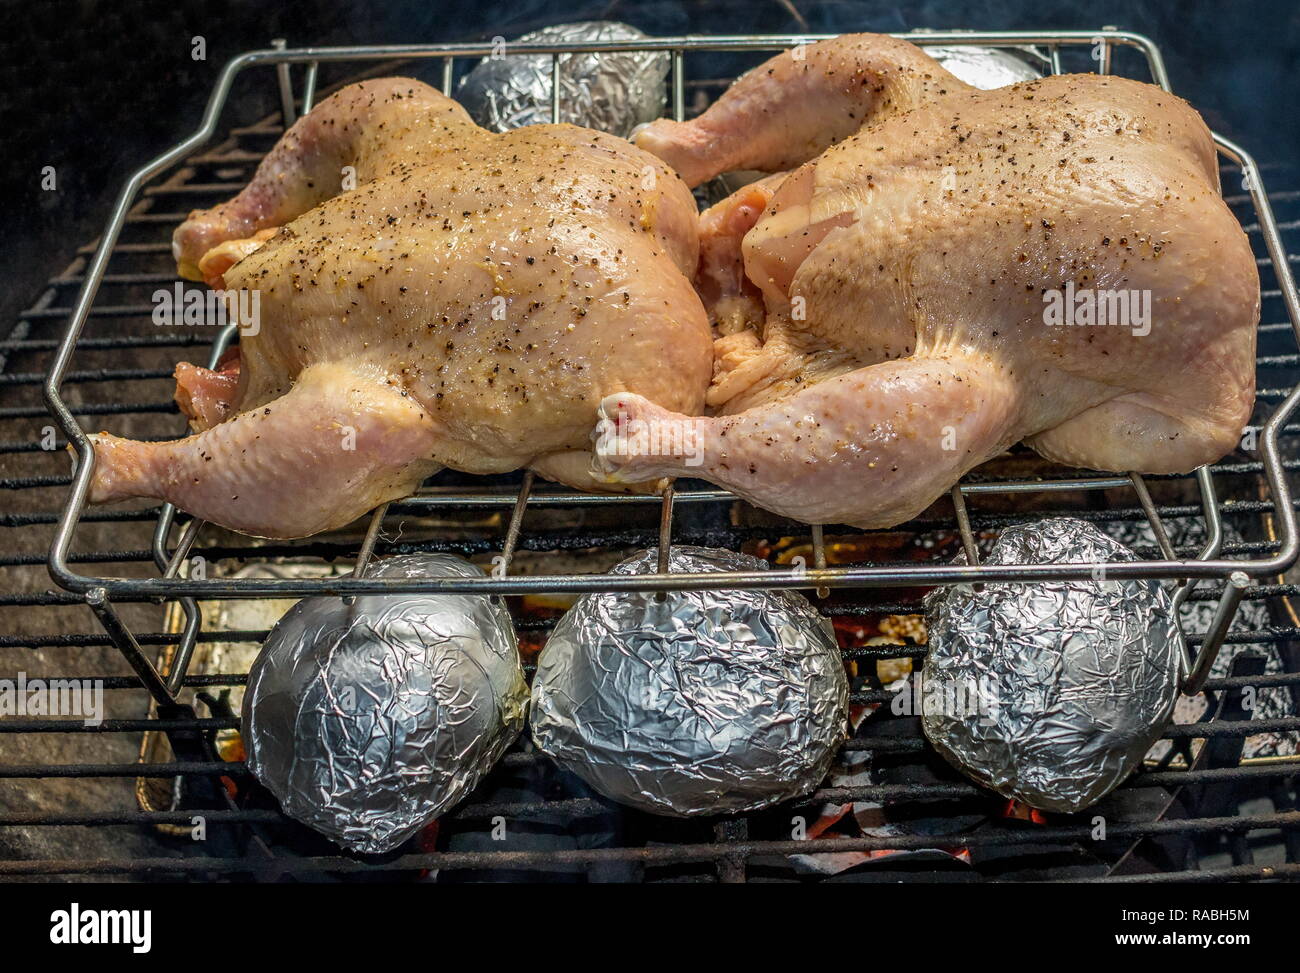 Carne de pollo con papas envueltas en papel aluminio cocinar en un hervidor  horno al aire libre imagen en formato horizontal Fotografía de stock - Alamy